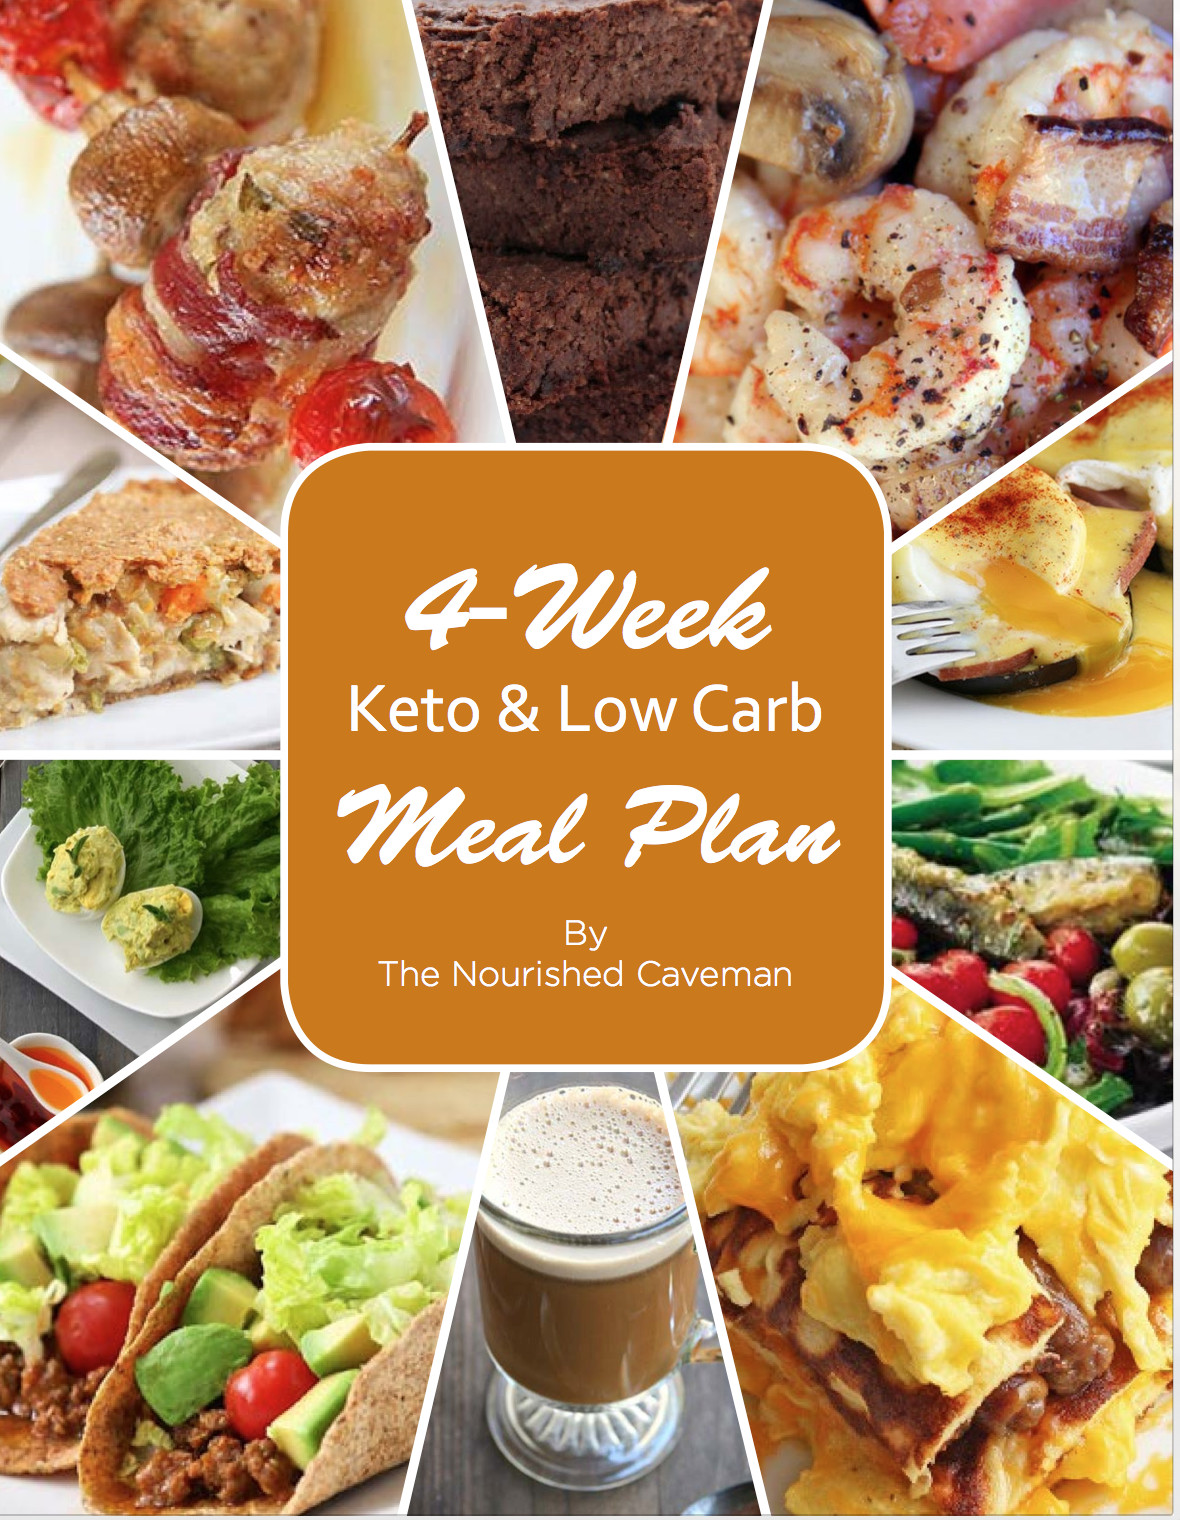 4 Week Keto Diet Plan
 4 Week Keto & Low Carb Meal Plan The Nourished Caveman